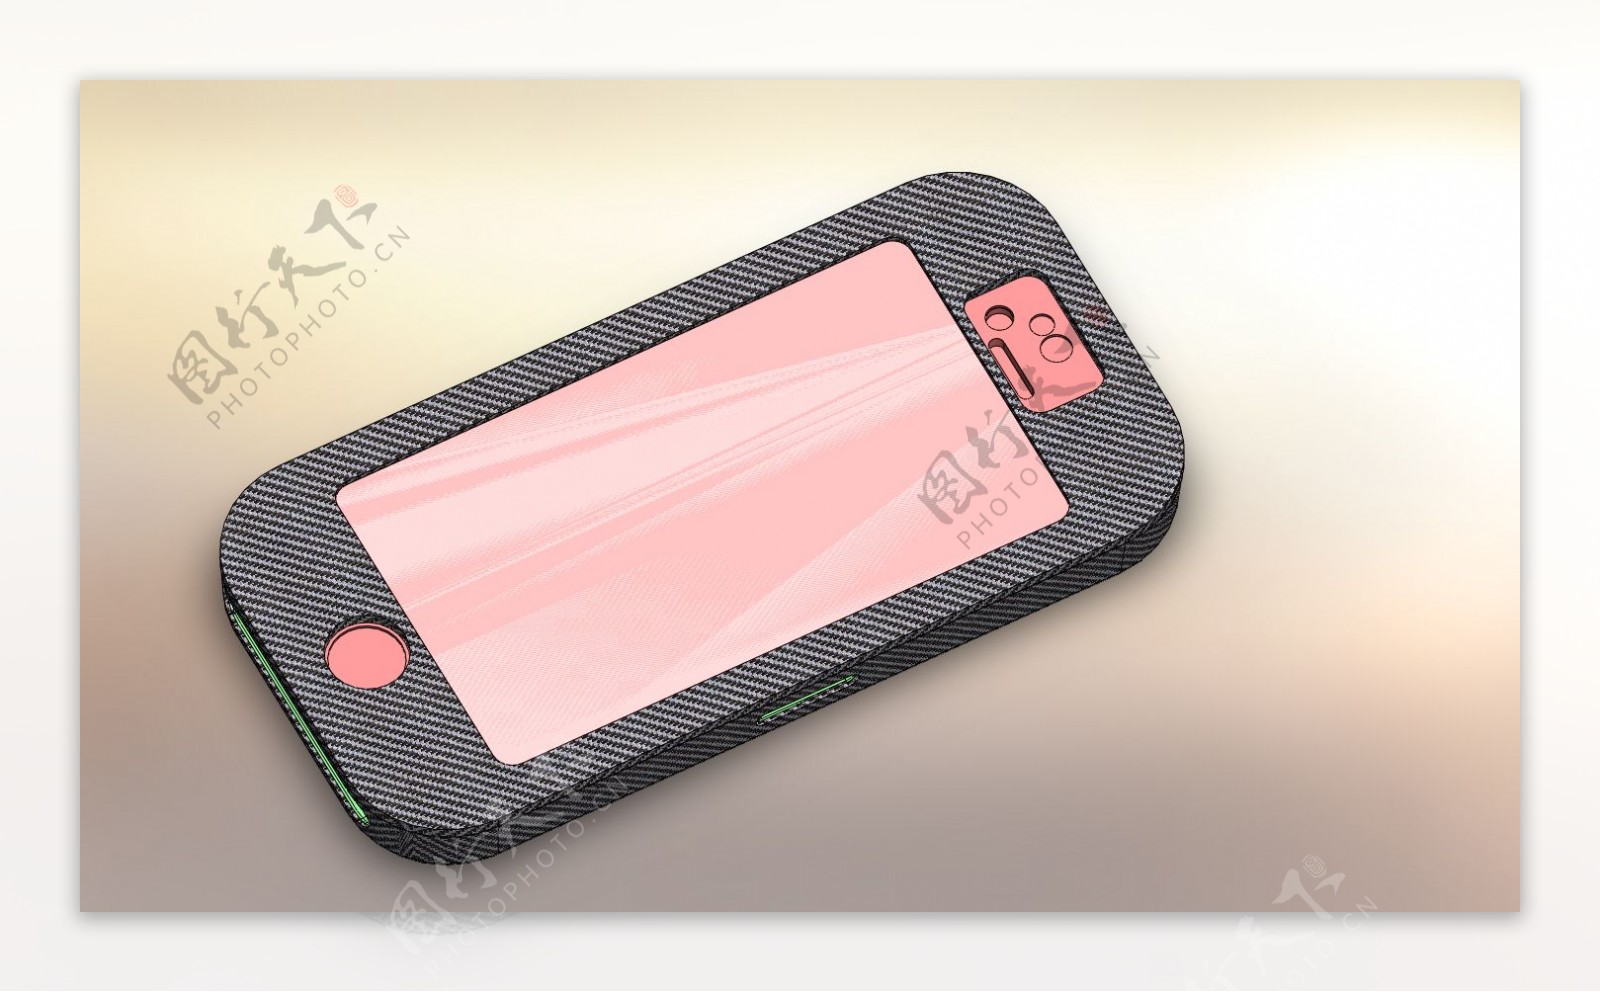 iPhone5覆盖在碳纤维设计